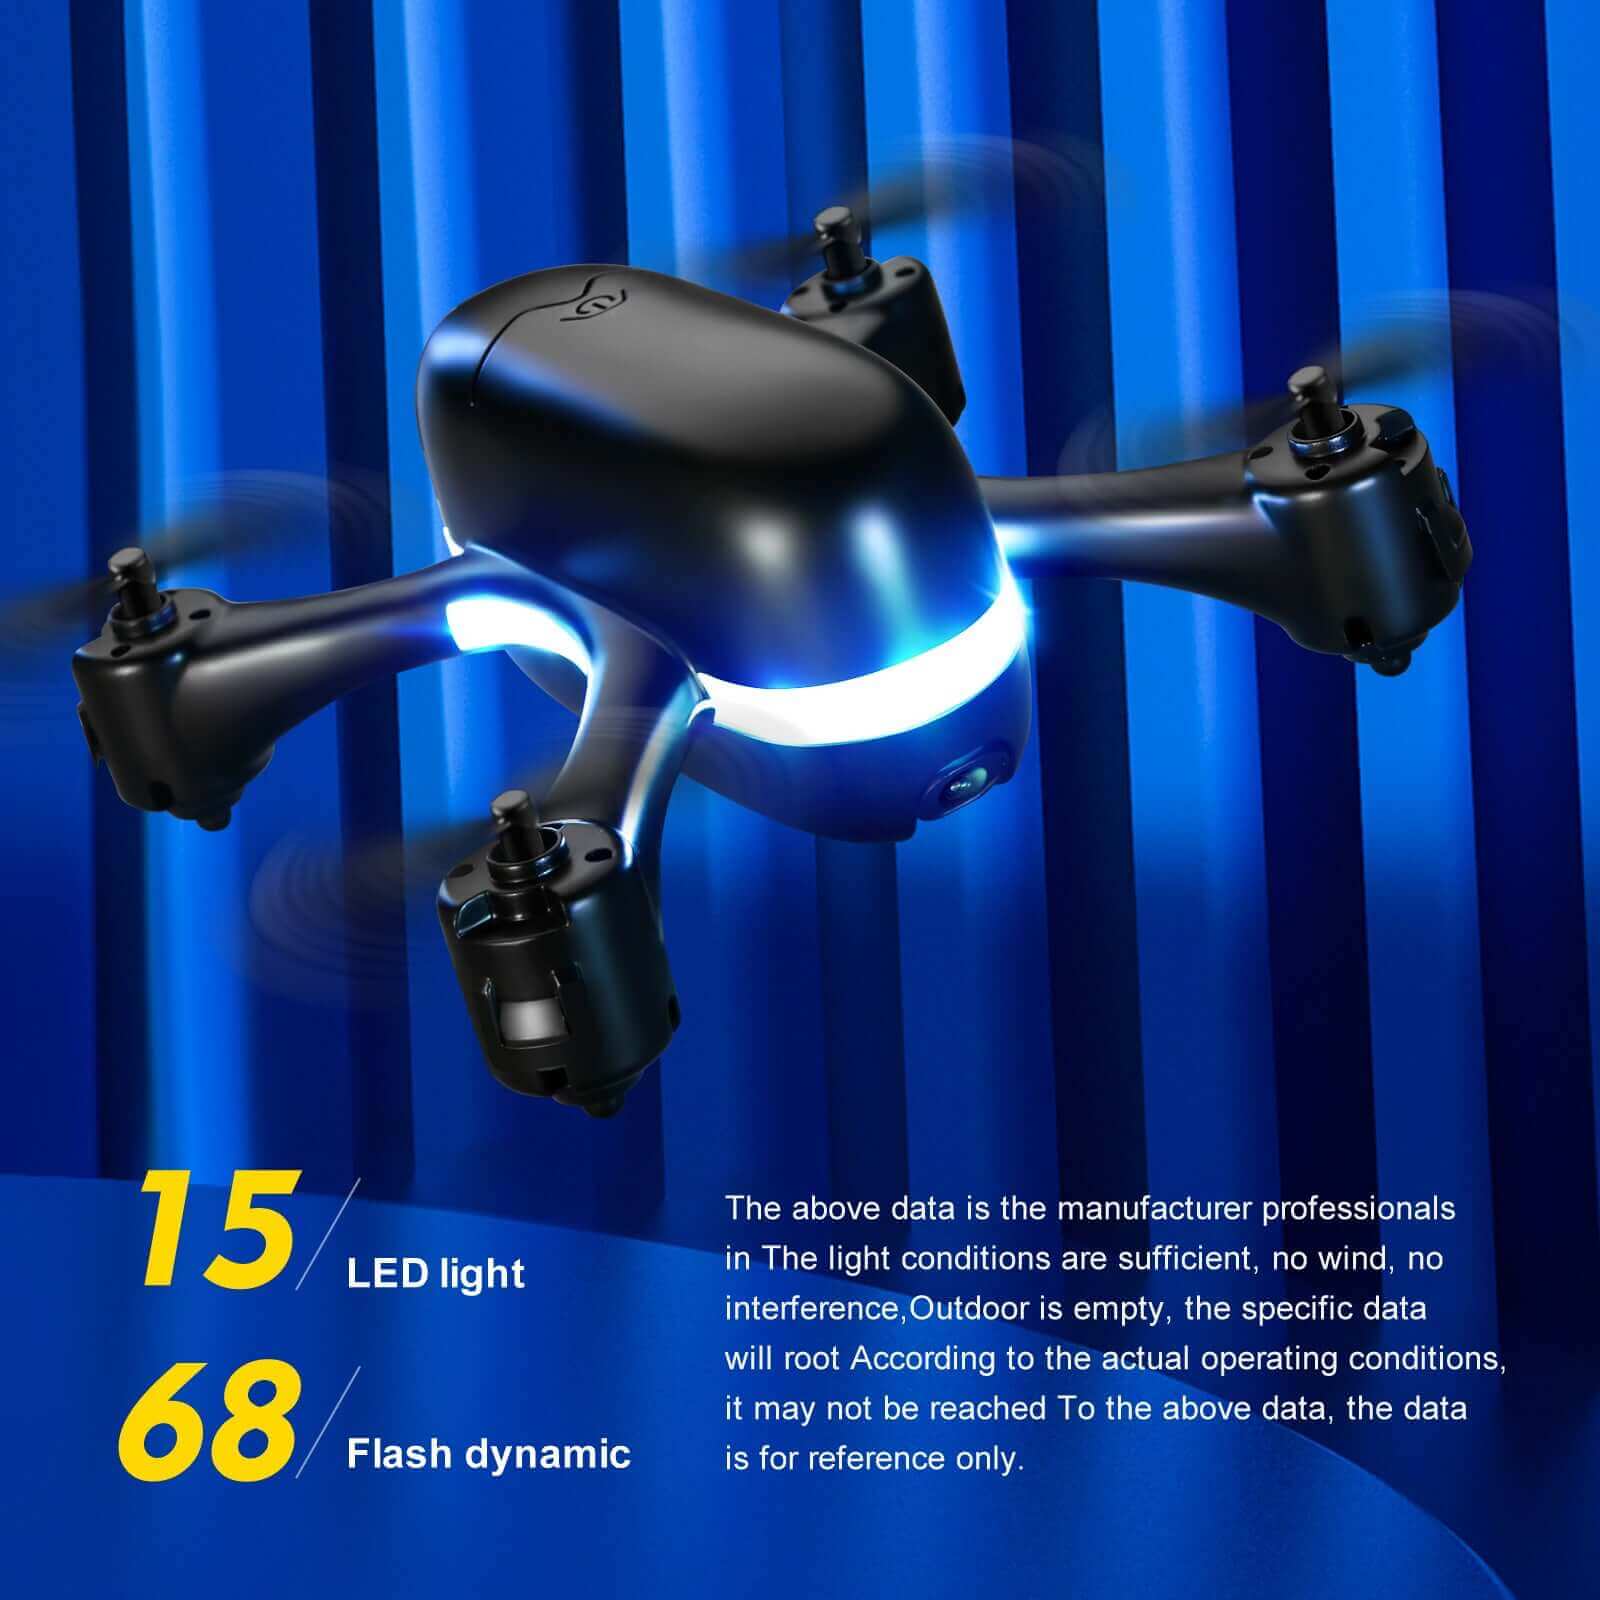 S88 4K Drone